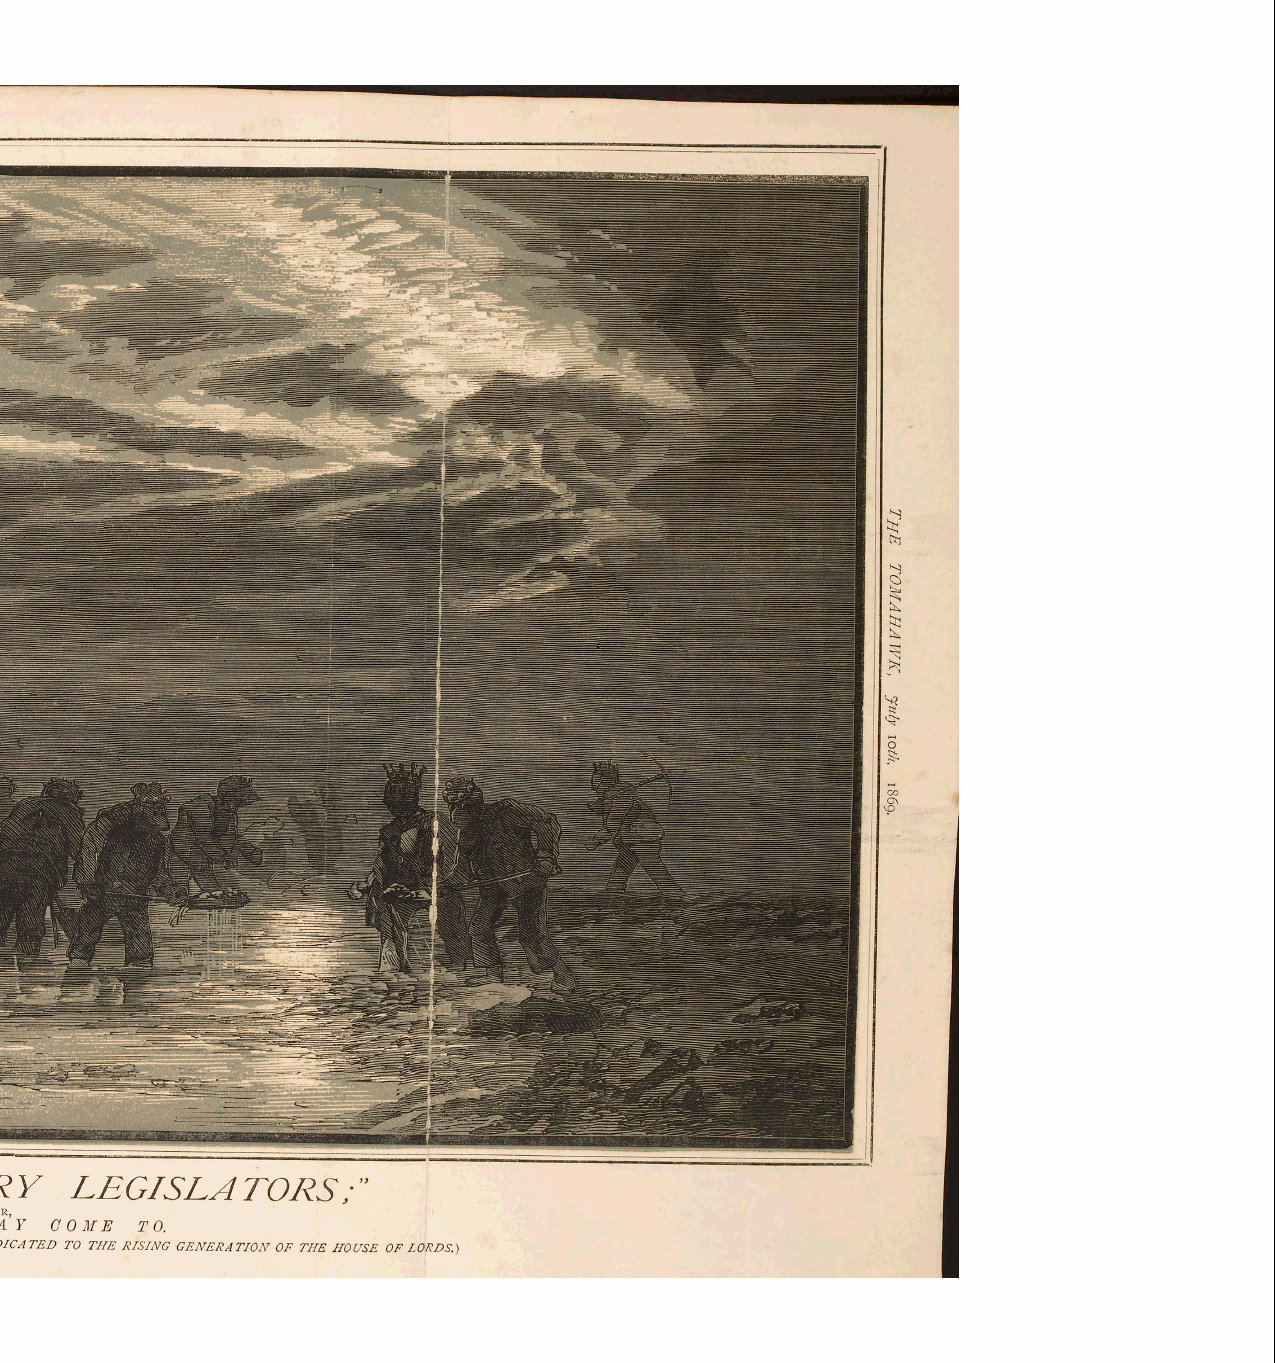 Tomahawk (1867-1870): jS F Y, 1st edition: 9